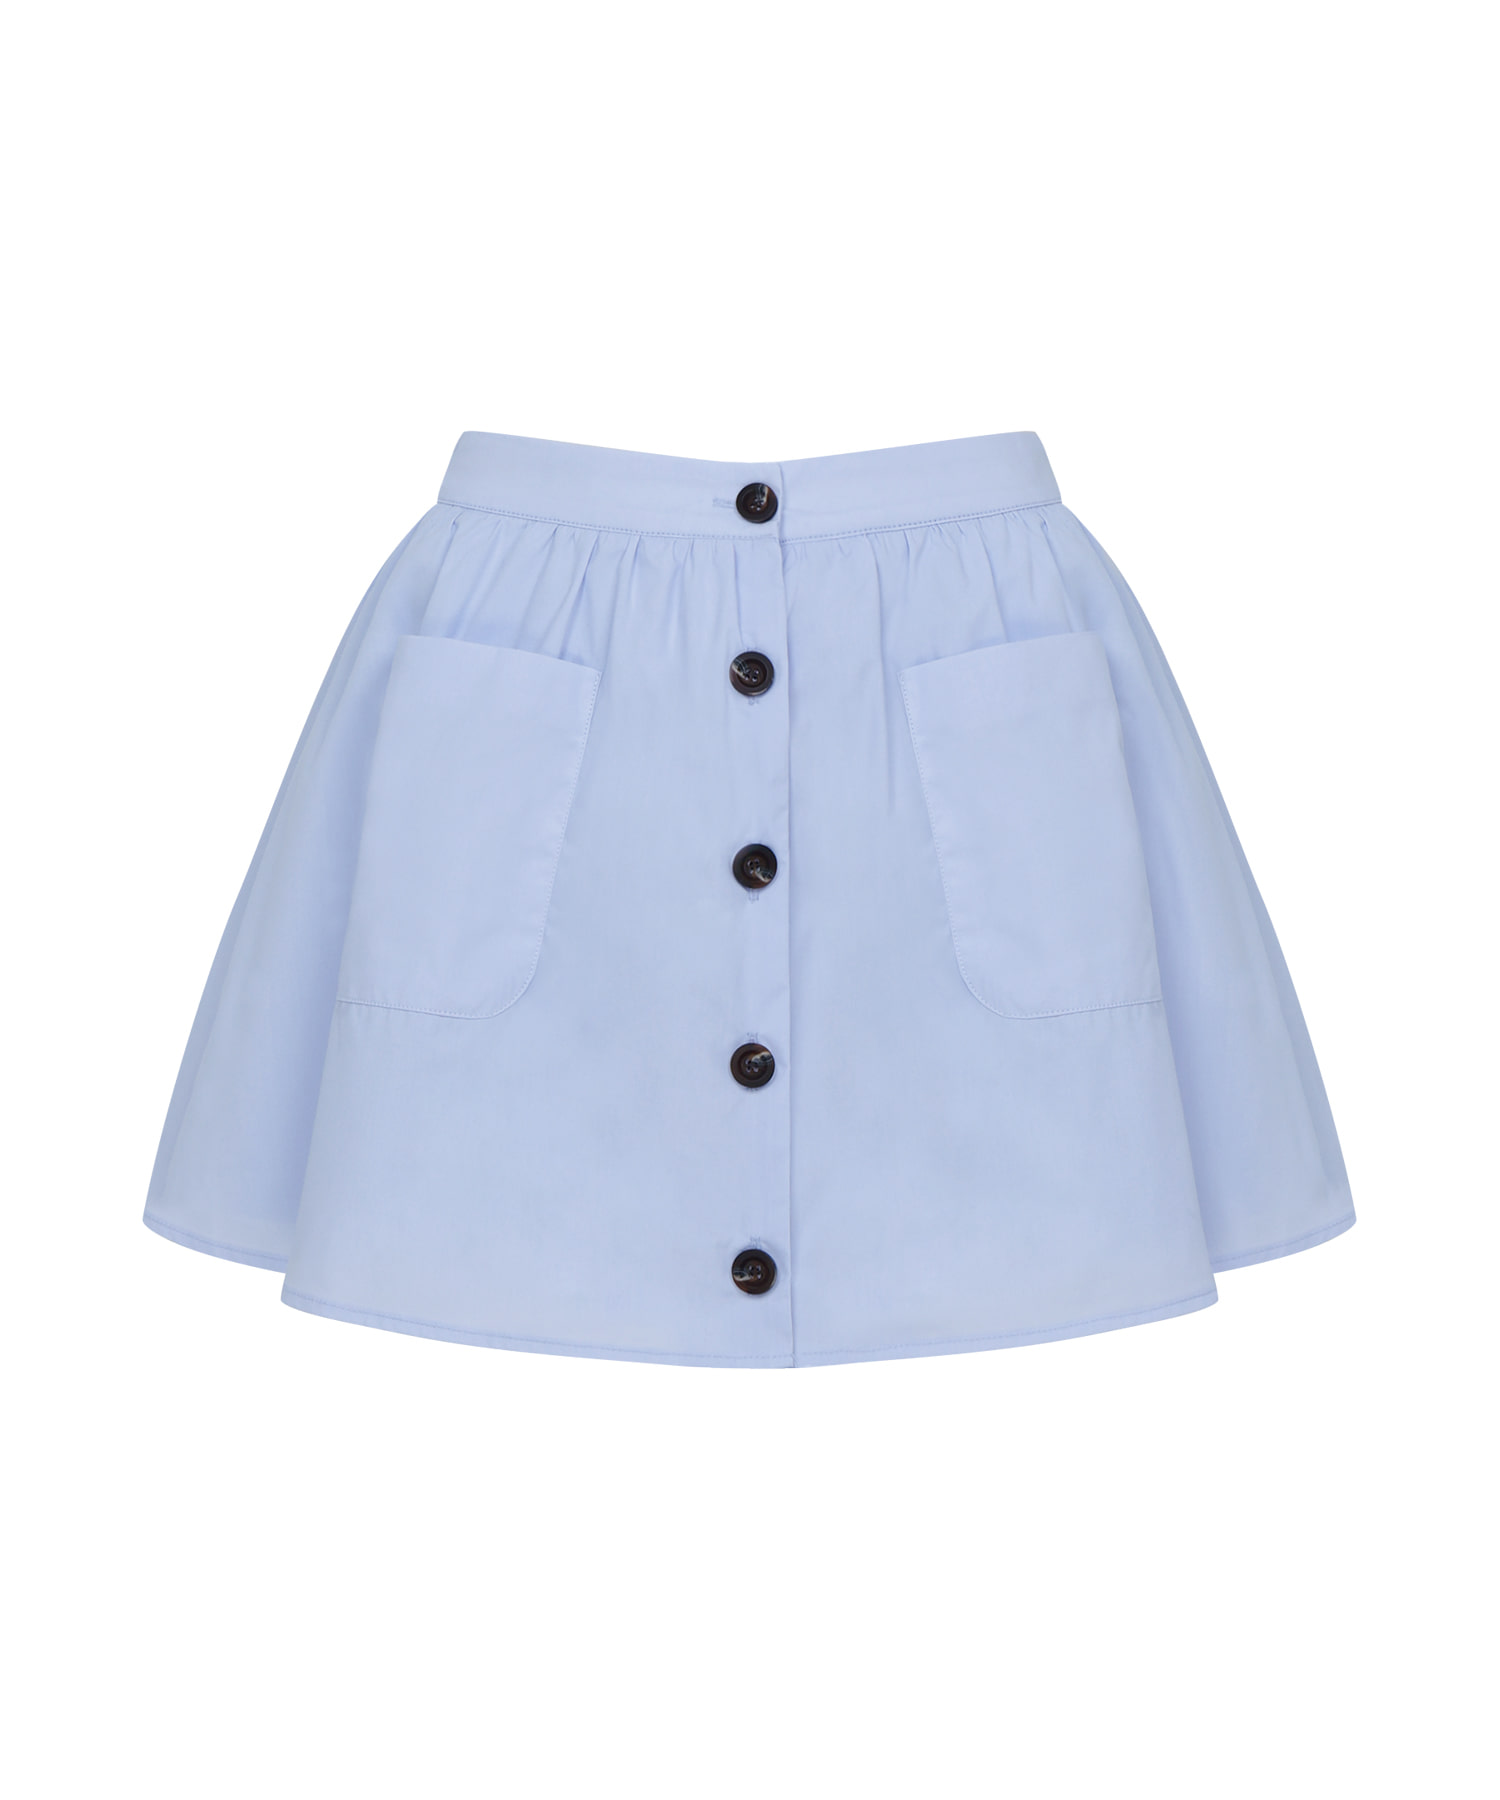 Dafodil Garden Flare Button Skirt ( Skyblue )